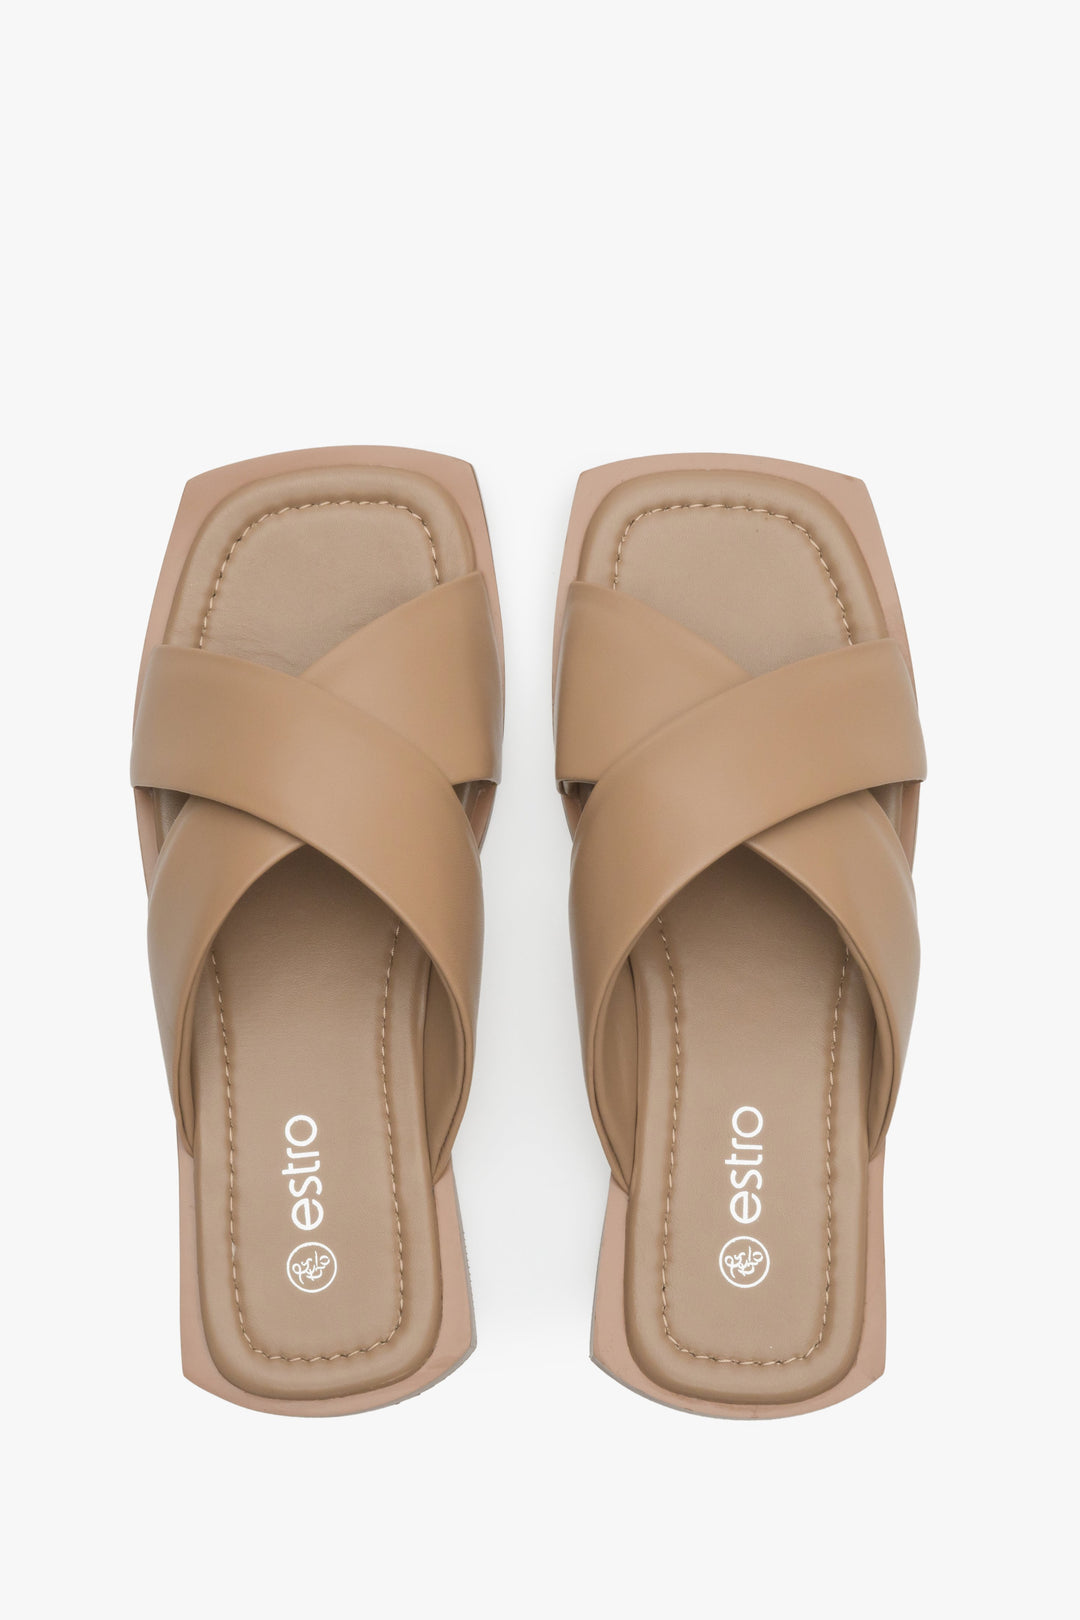 Women's slide sandals made of brown genuine leather Estro - presentation form above.